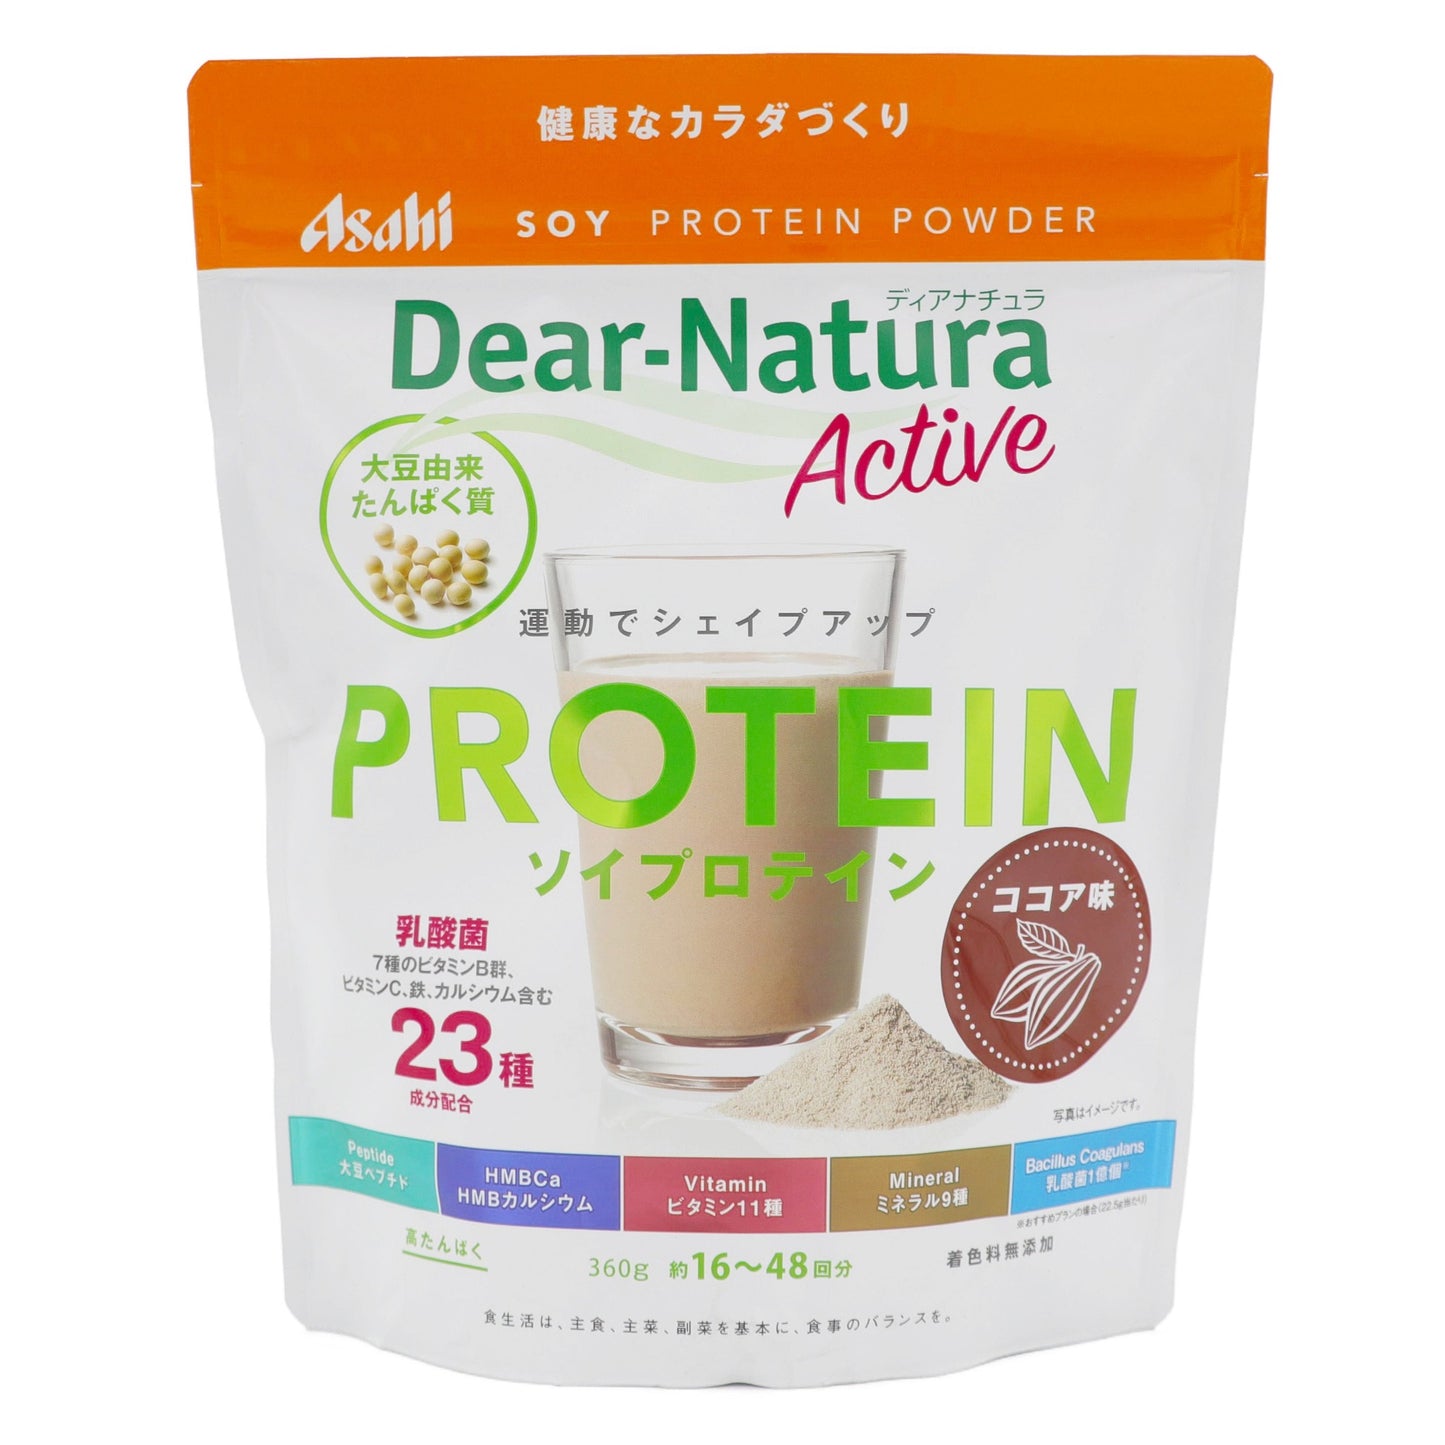 【Asahi 朝日】Dear-Natura Active 活性大豆蛋白粉 可可風味360g